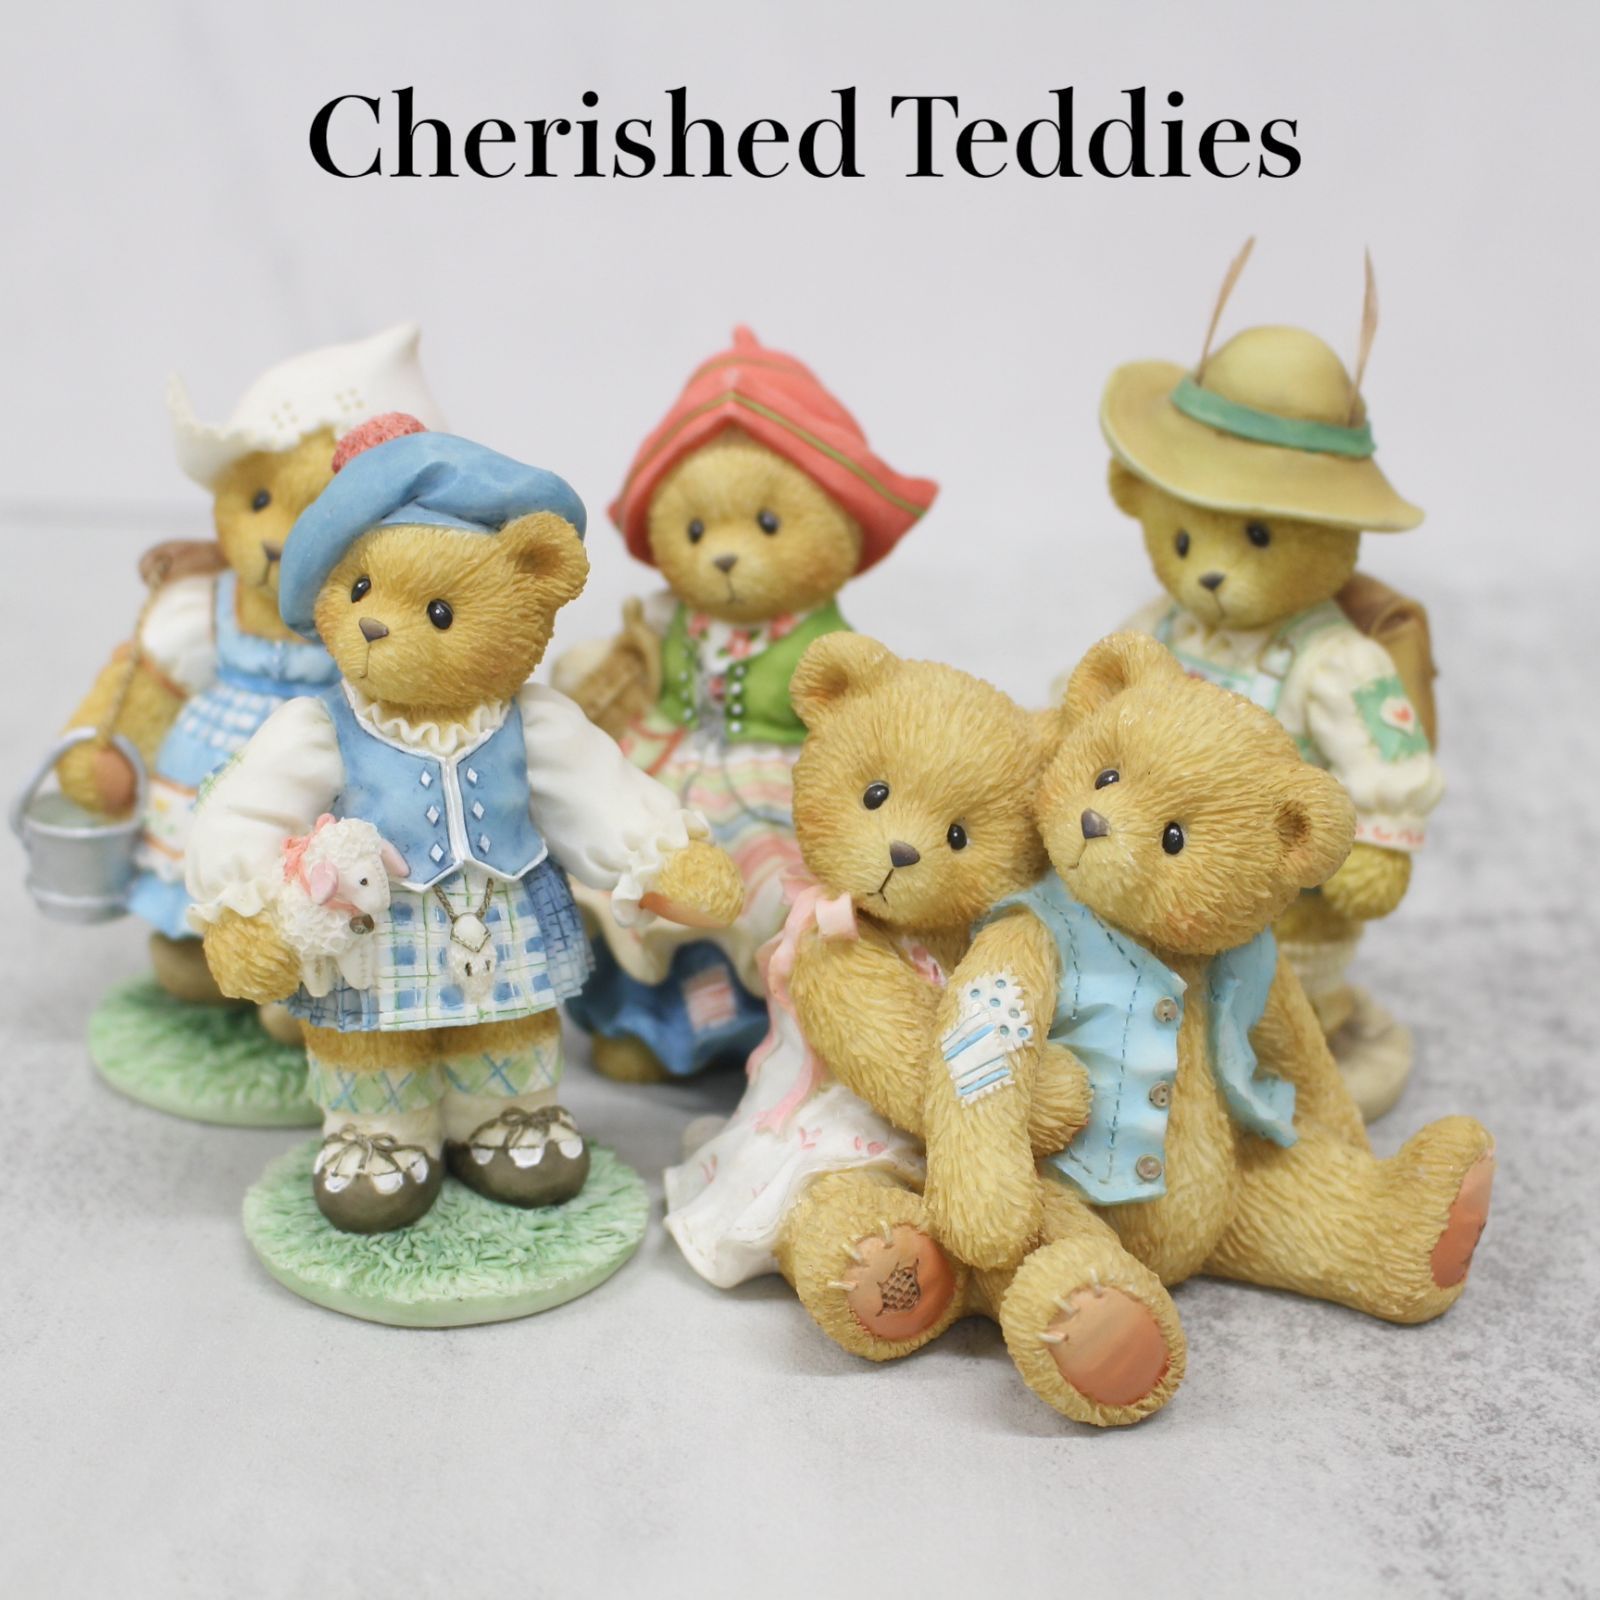 S391)Cherished Teddies 置物 5体セット テディベア くま - メルカリ